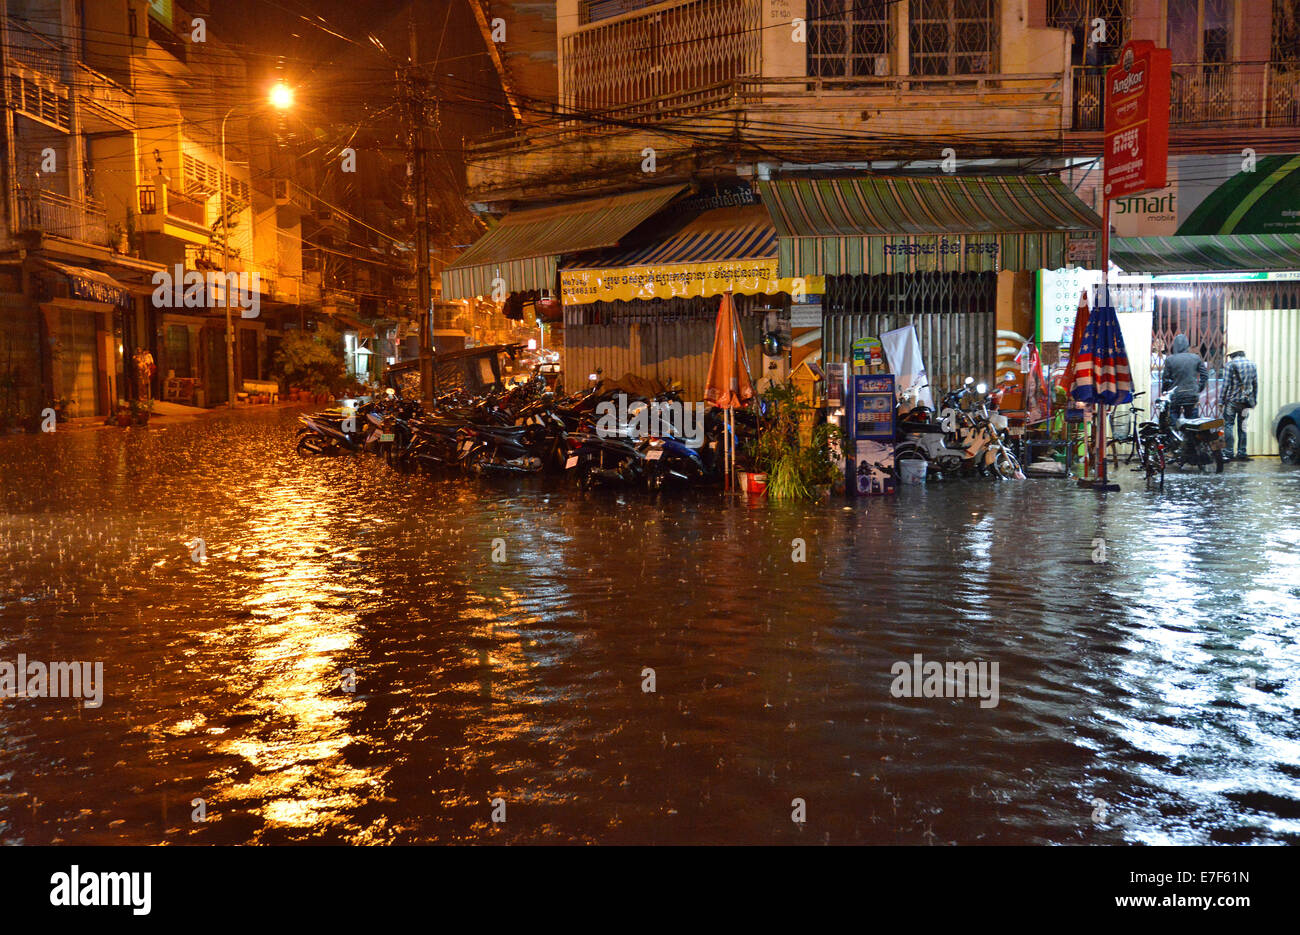 Street scene with a flooded road during heavy monsoon rain at night, city centre, Phnom Penh, Cambodia Stock Photo